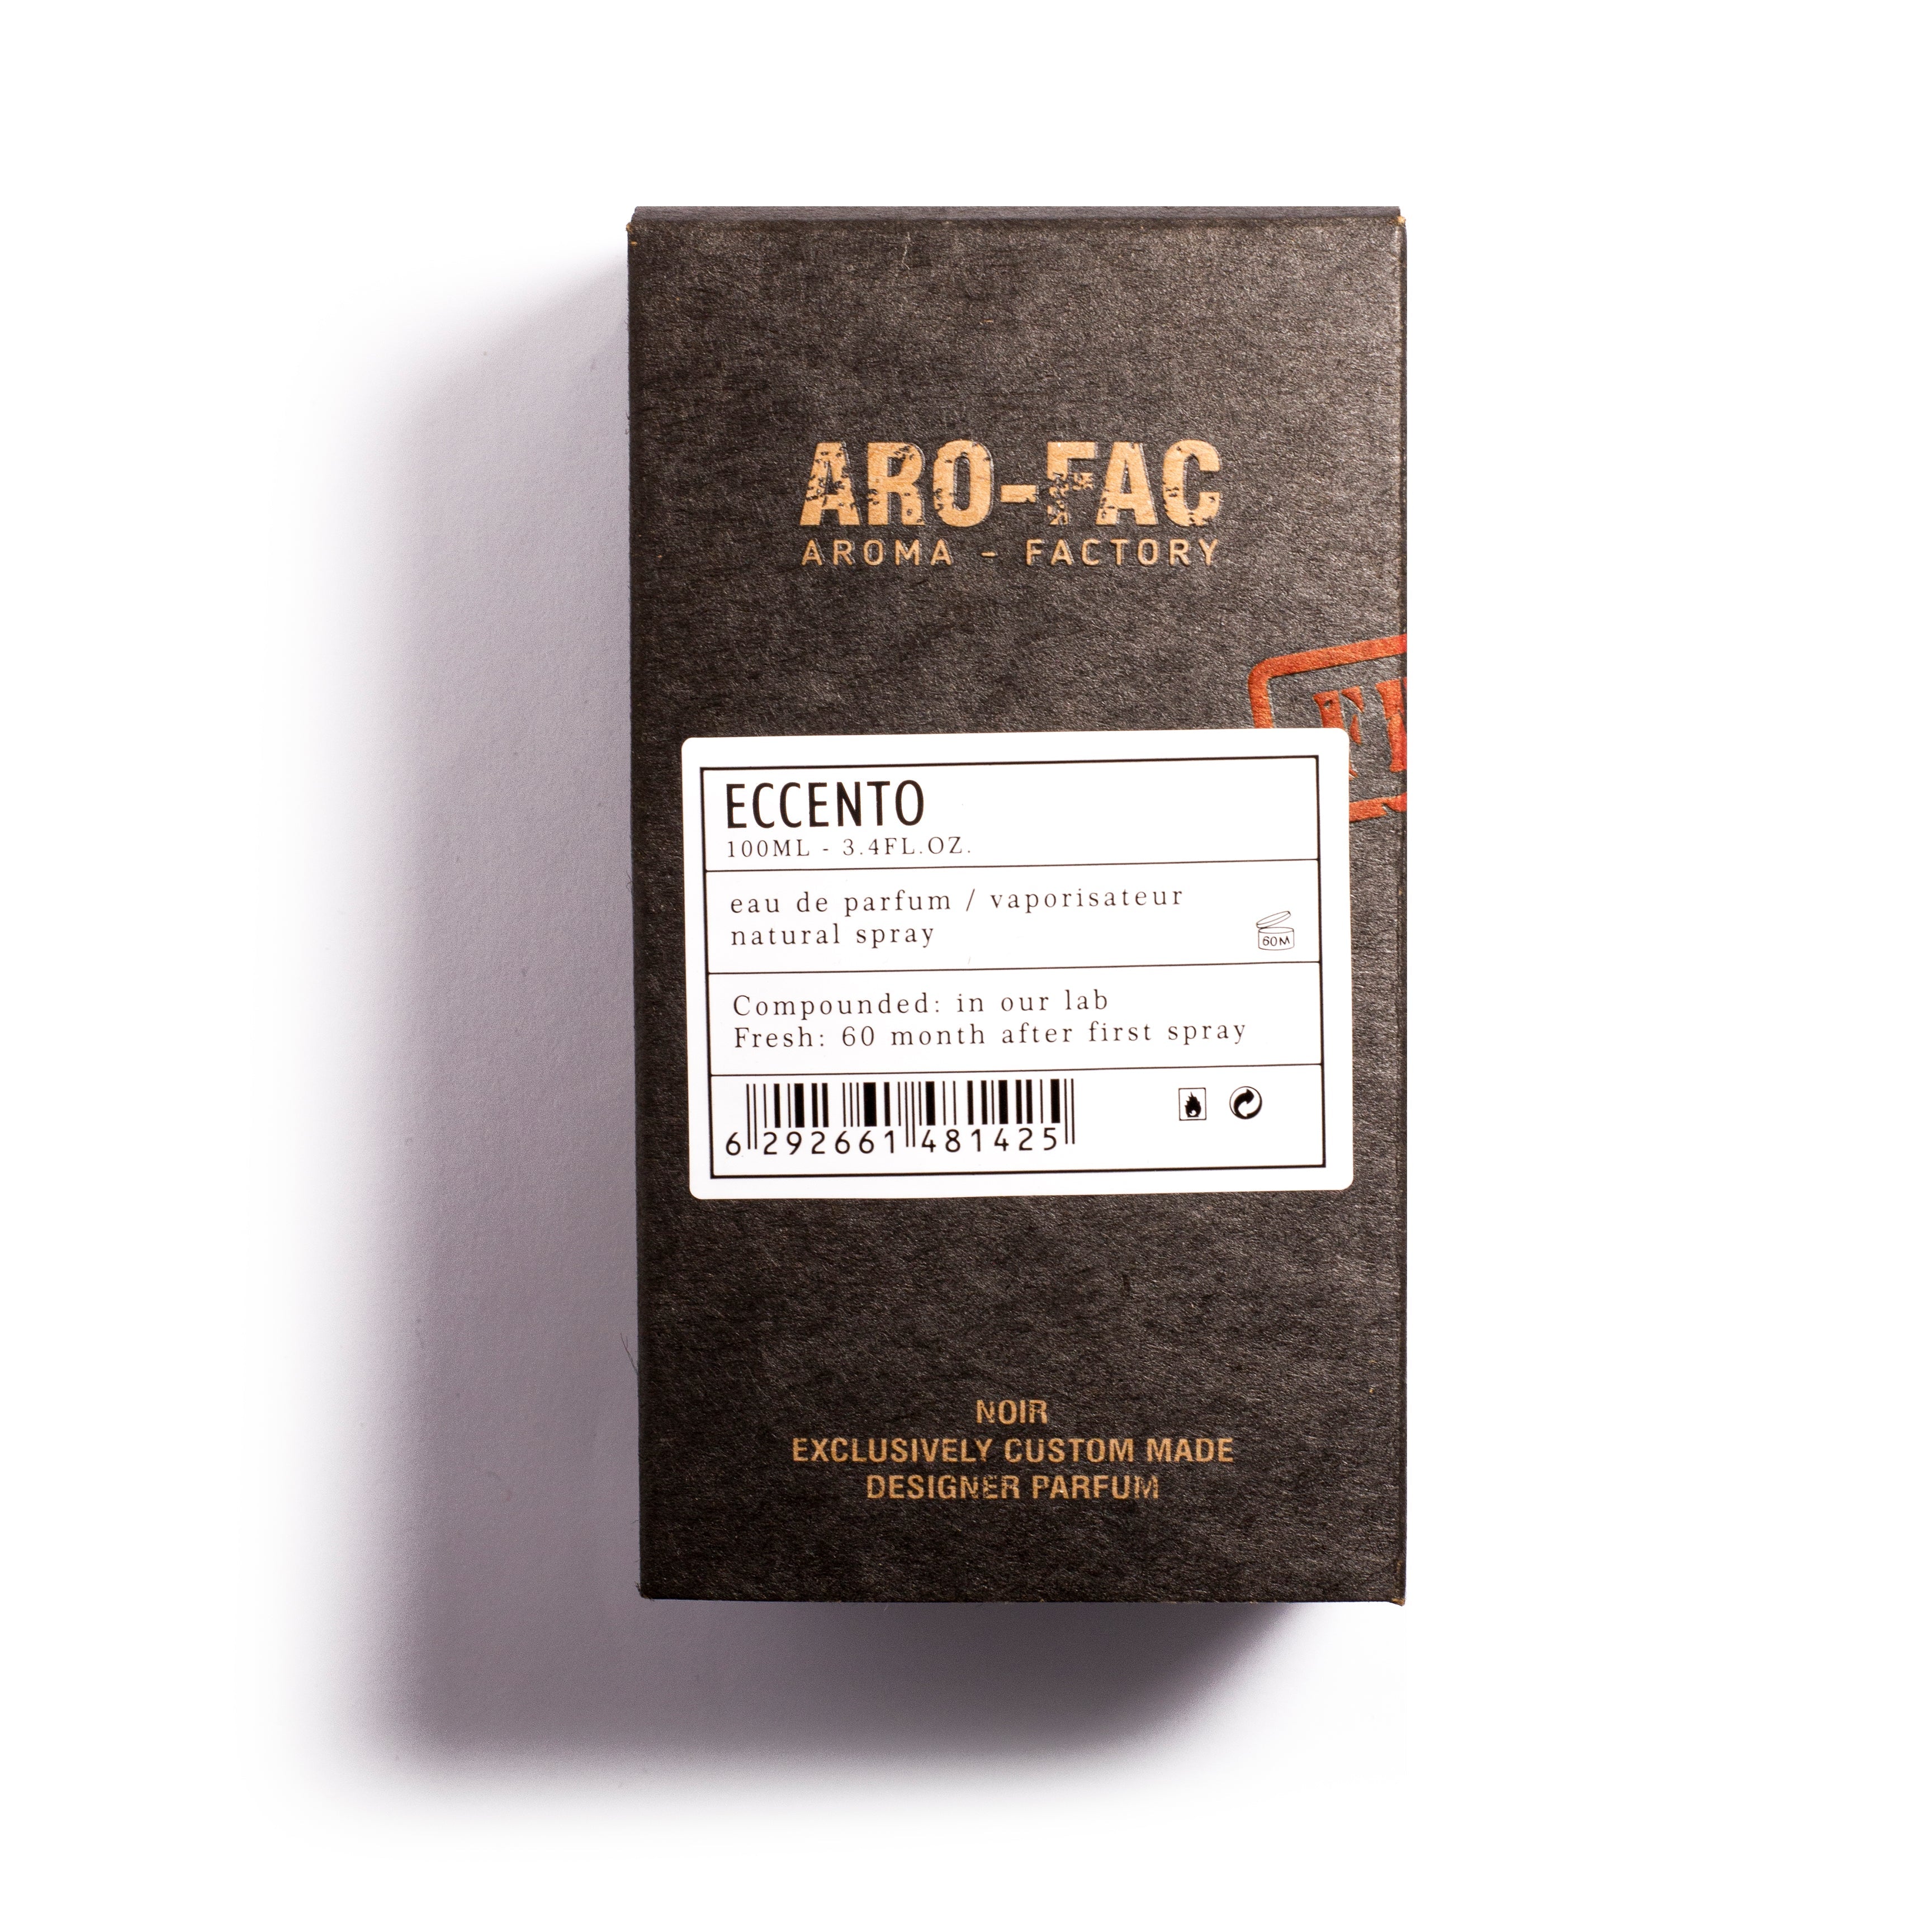 ARO-FAC ECCENTO - AMD PERFUMES